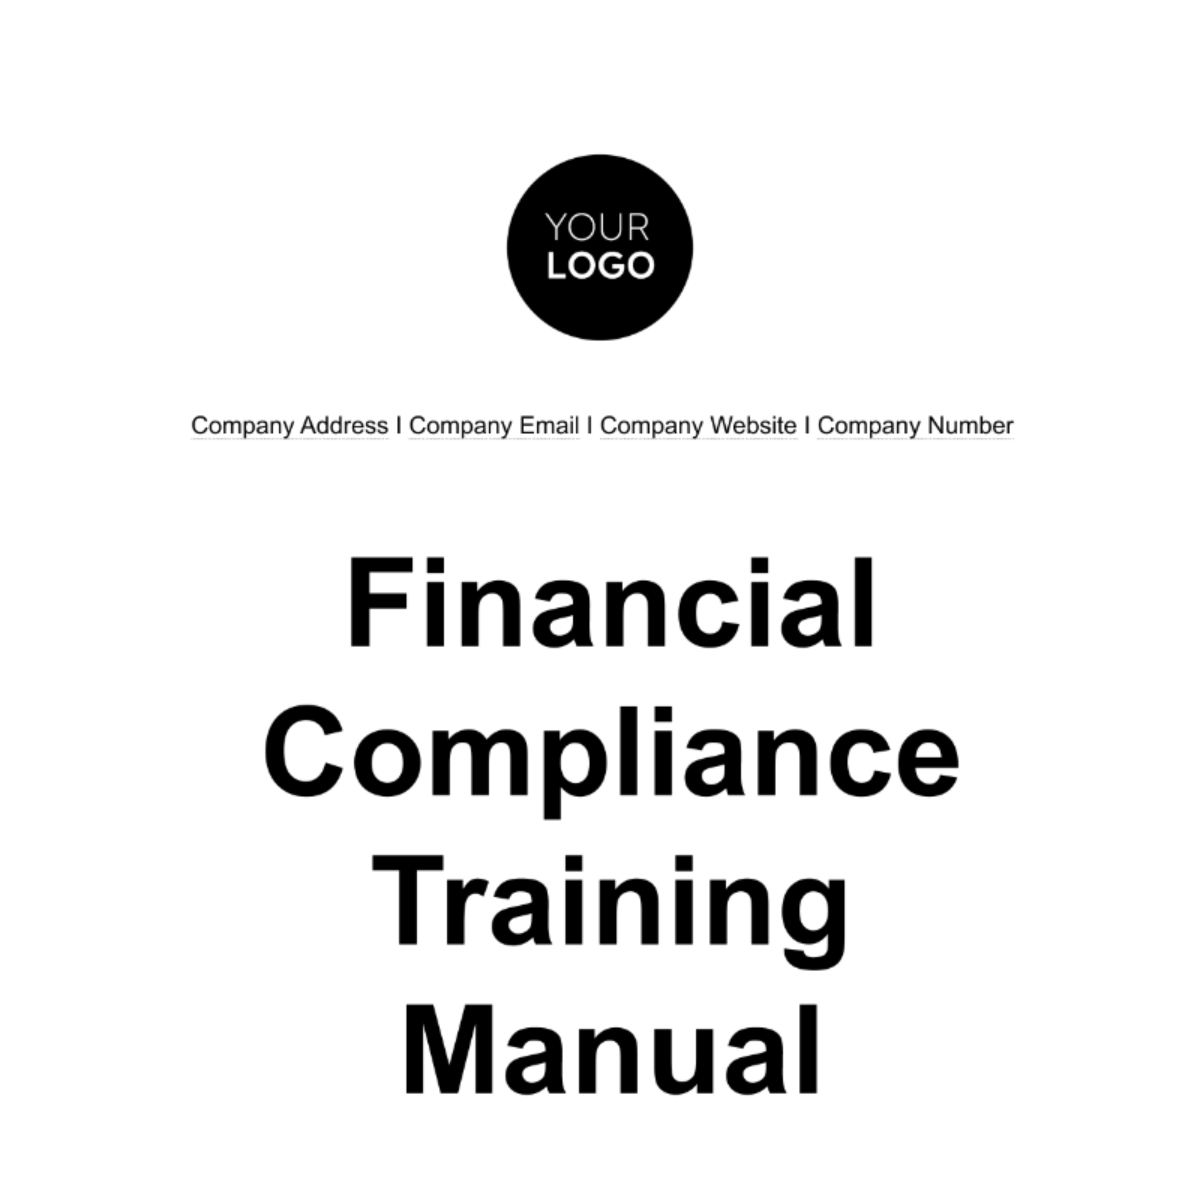 Financial Compliance Training Manual Template